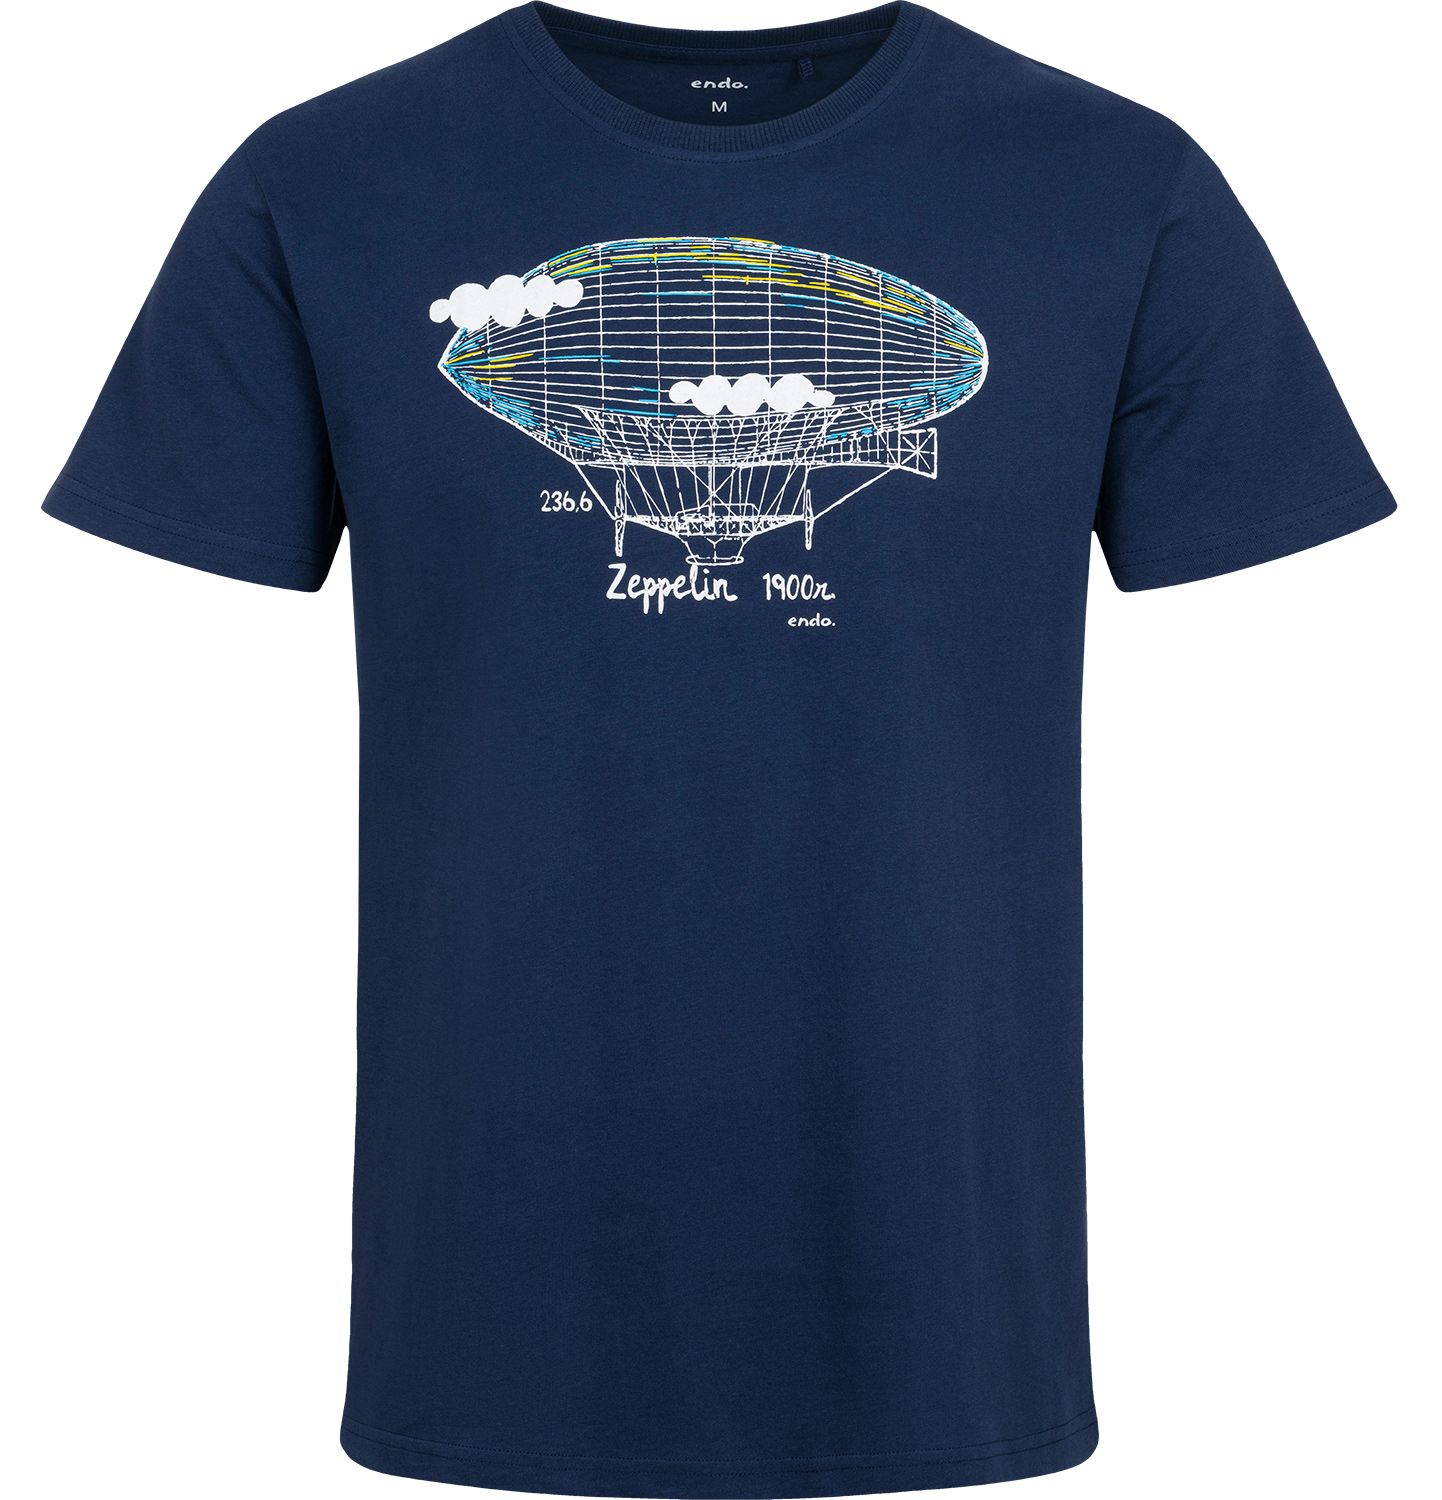 T-shirt Koszulka męska bawełna Grantowa XL Sterowiec Zeppelin Endo